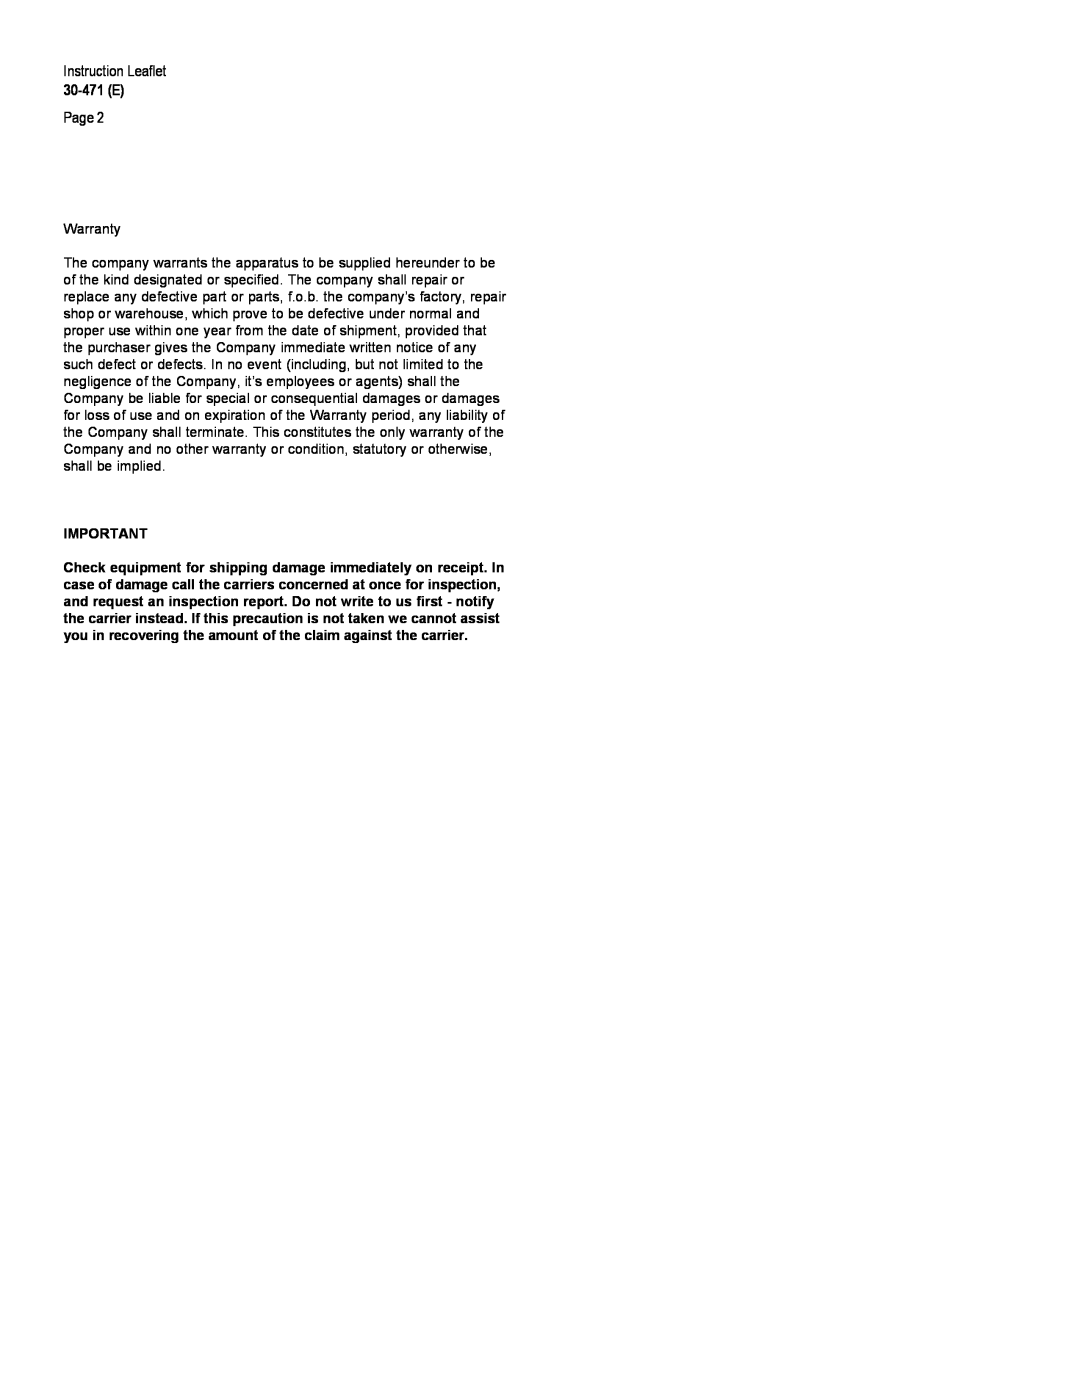 Westinghouse 30-471 (E) warranty Instruction Leaflet, 30-471 E, Page 